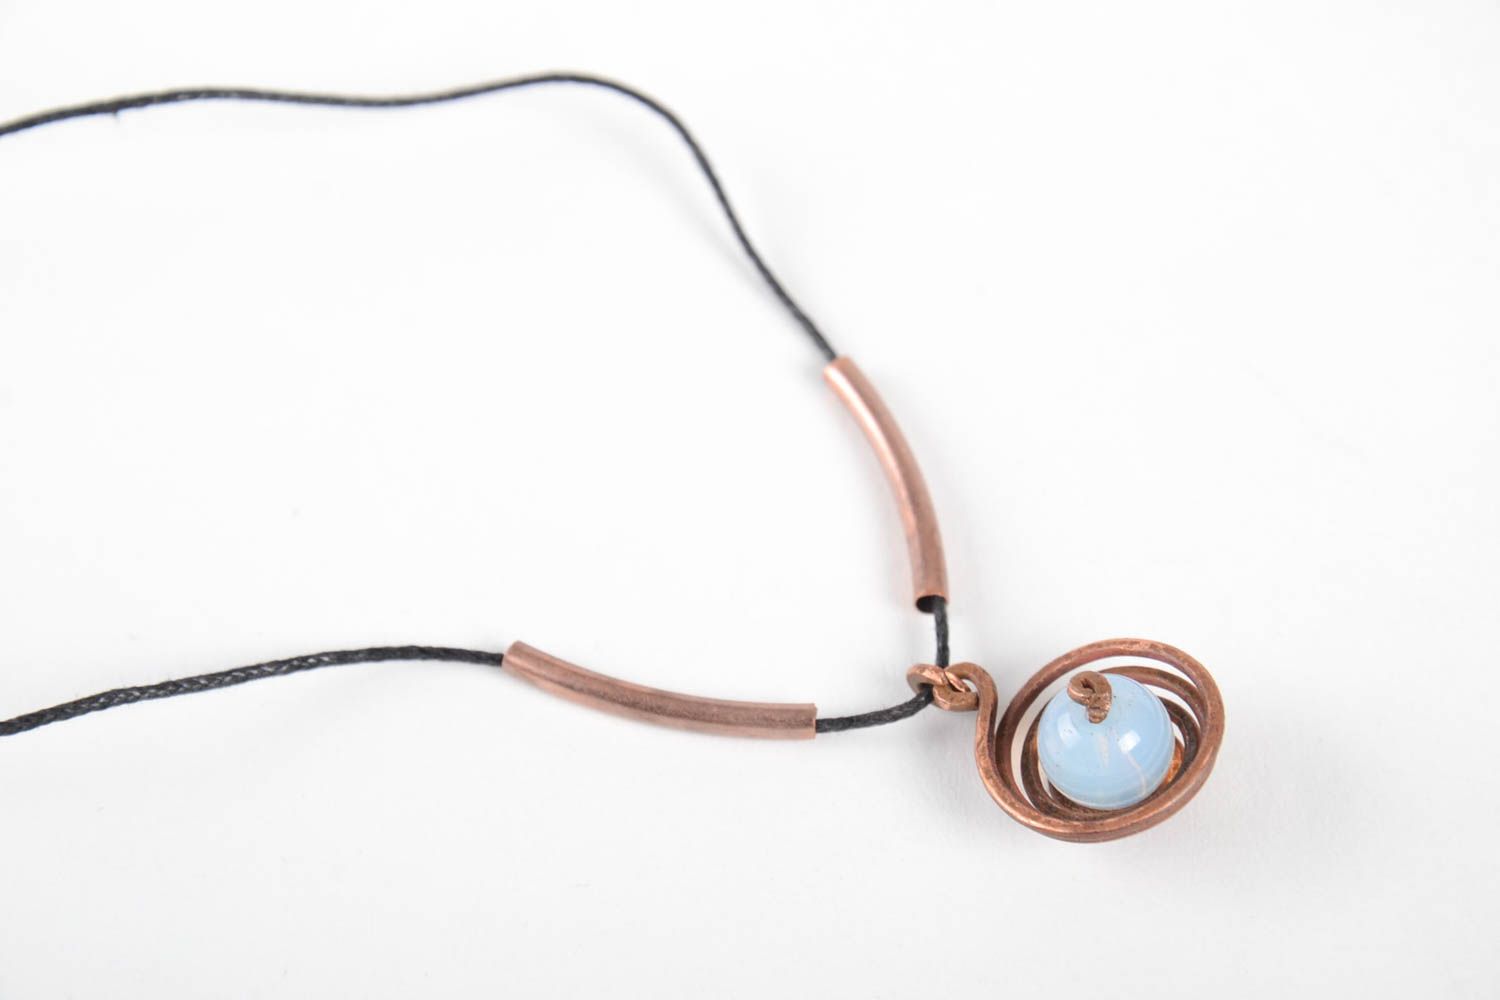 Handmade pendant metal pendant unusual jewelry designer accessory gift for her photo 3